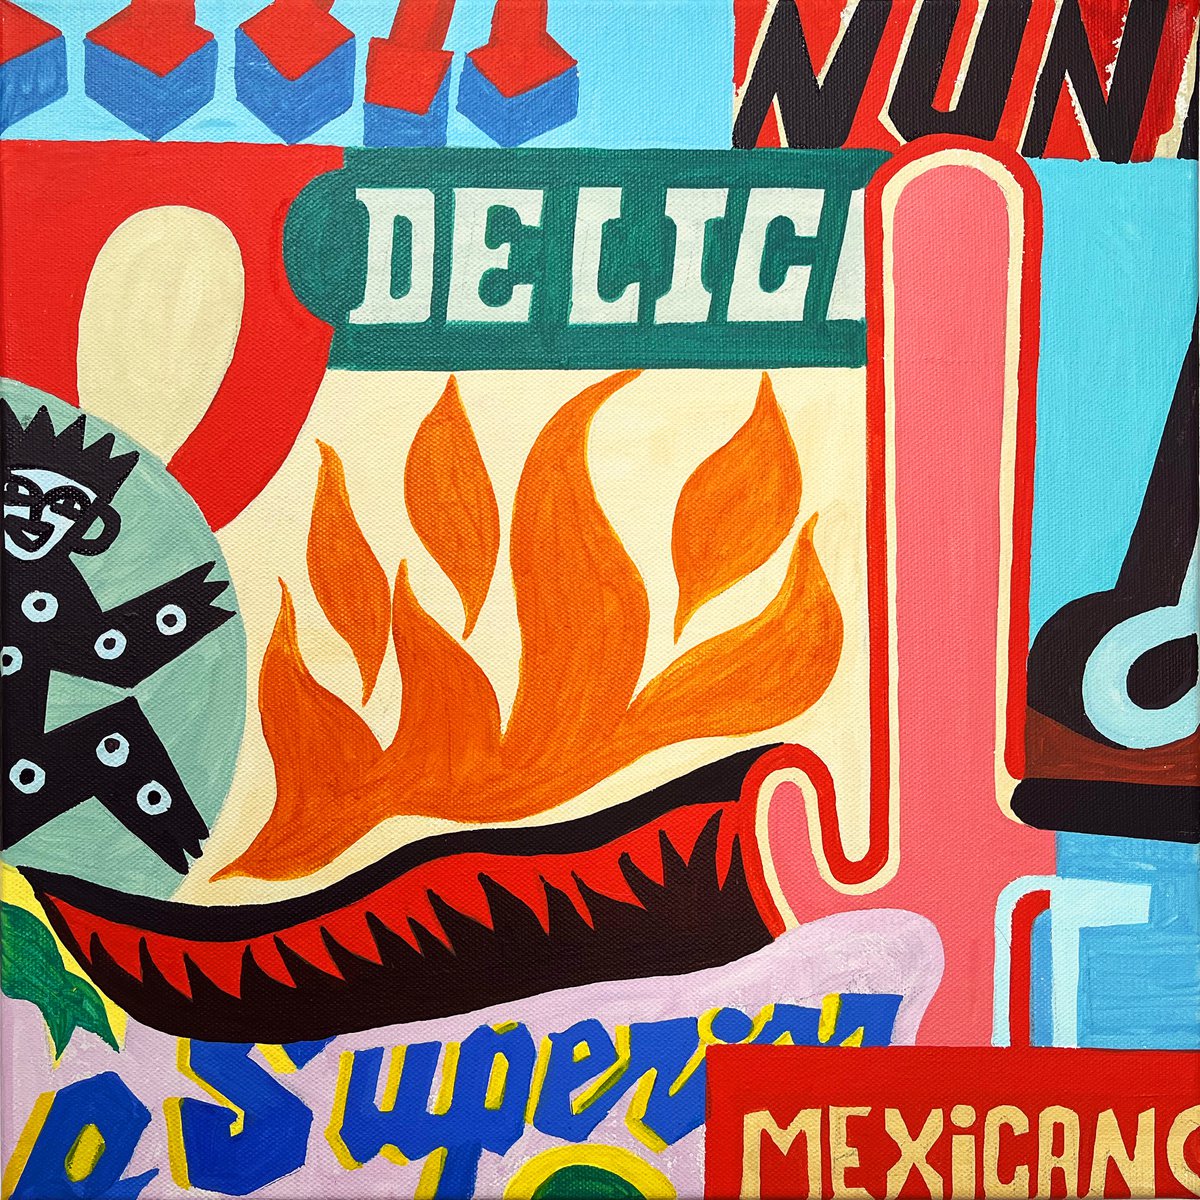 Mexico-letreros-01c by Andr Baldet